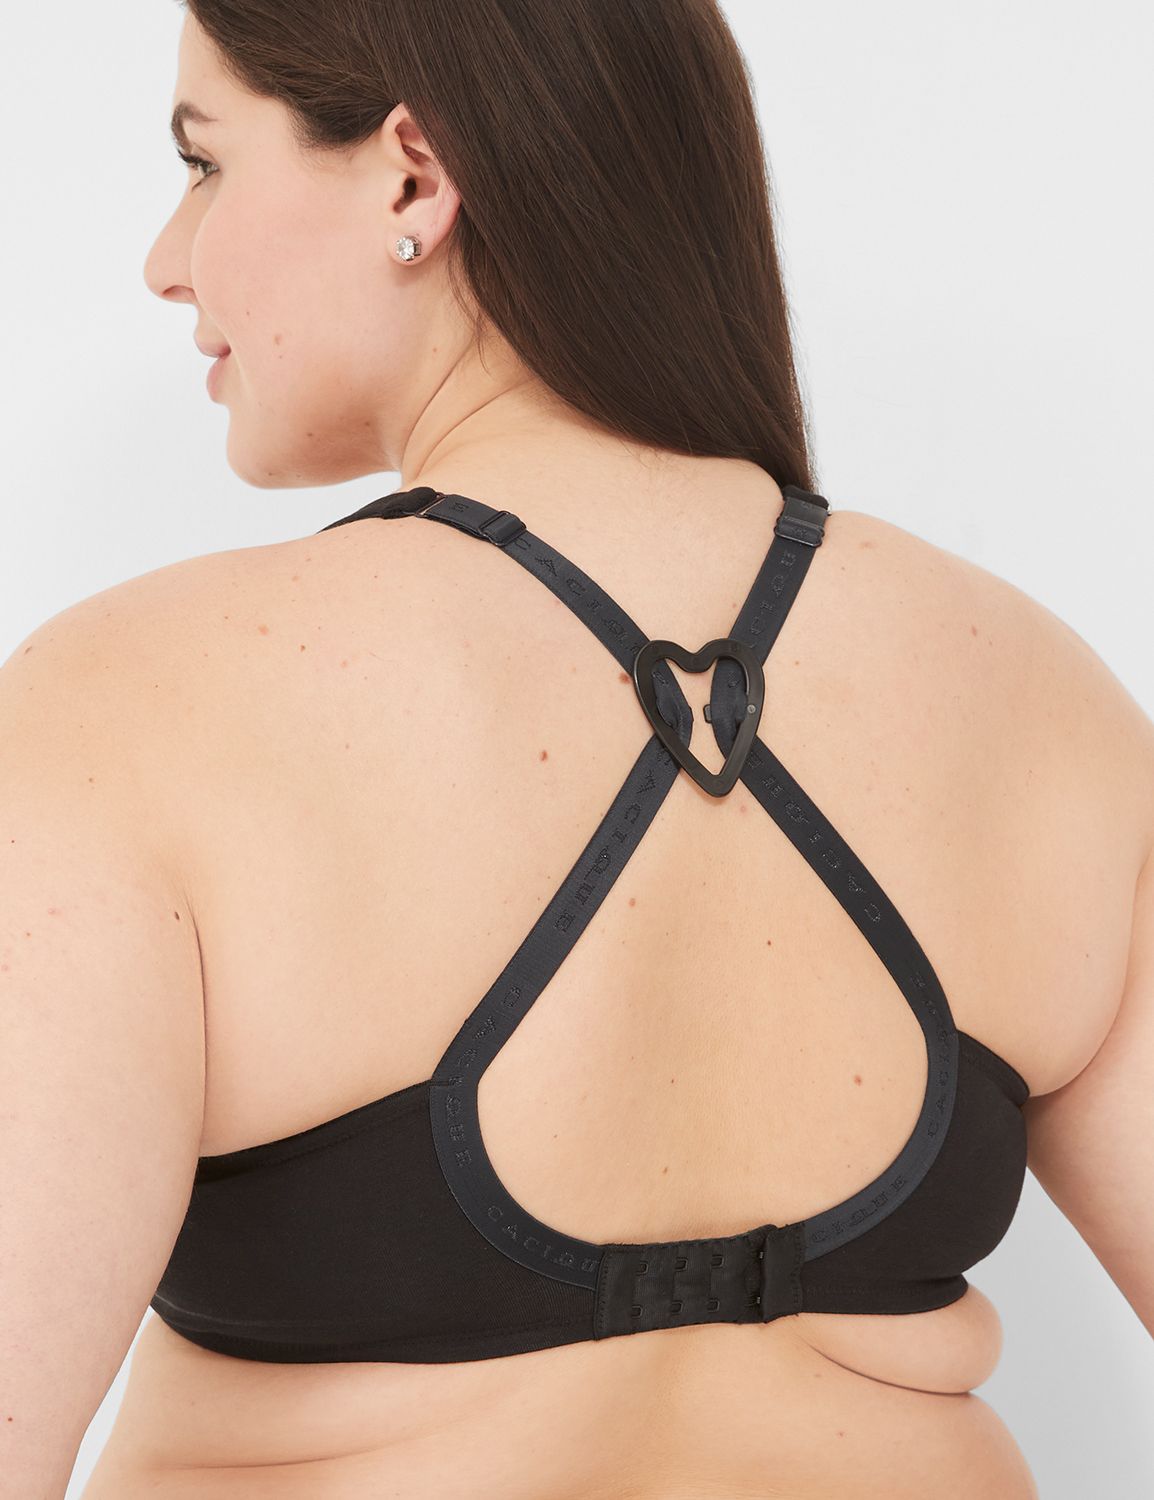 Bra Strap Holder For Womens Undergarment,bra Cross Back Clips 15 Pieces